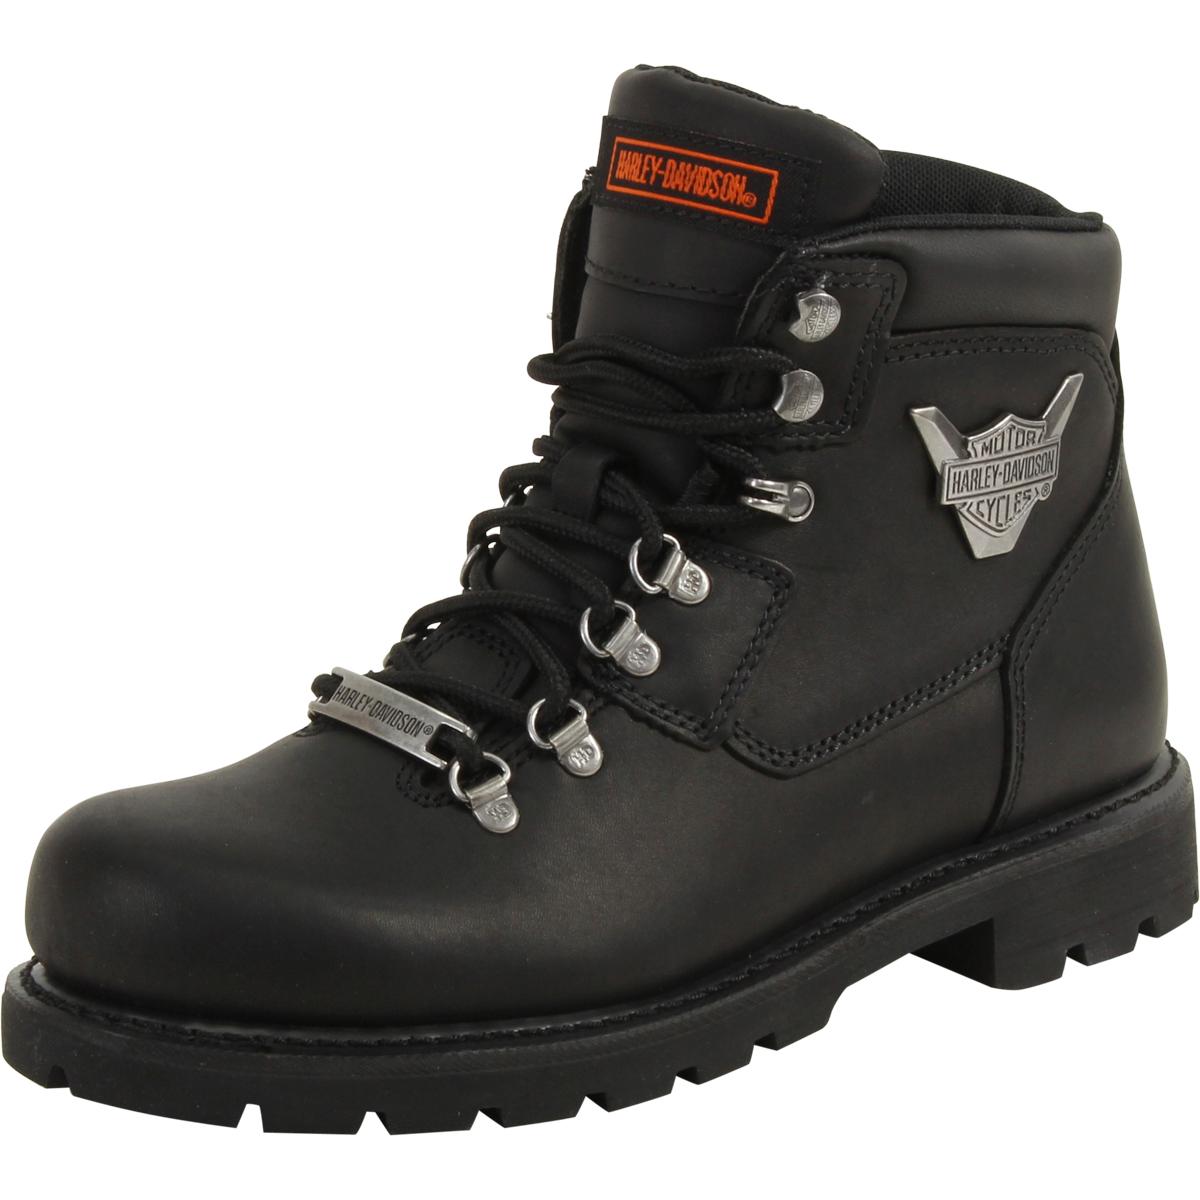 Harley Davidson Men's Glenmont Work Boots Shoes - Black - 9.5 D(M) US